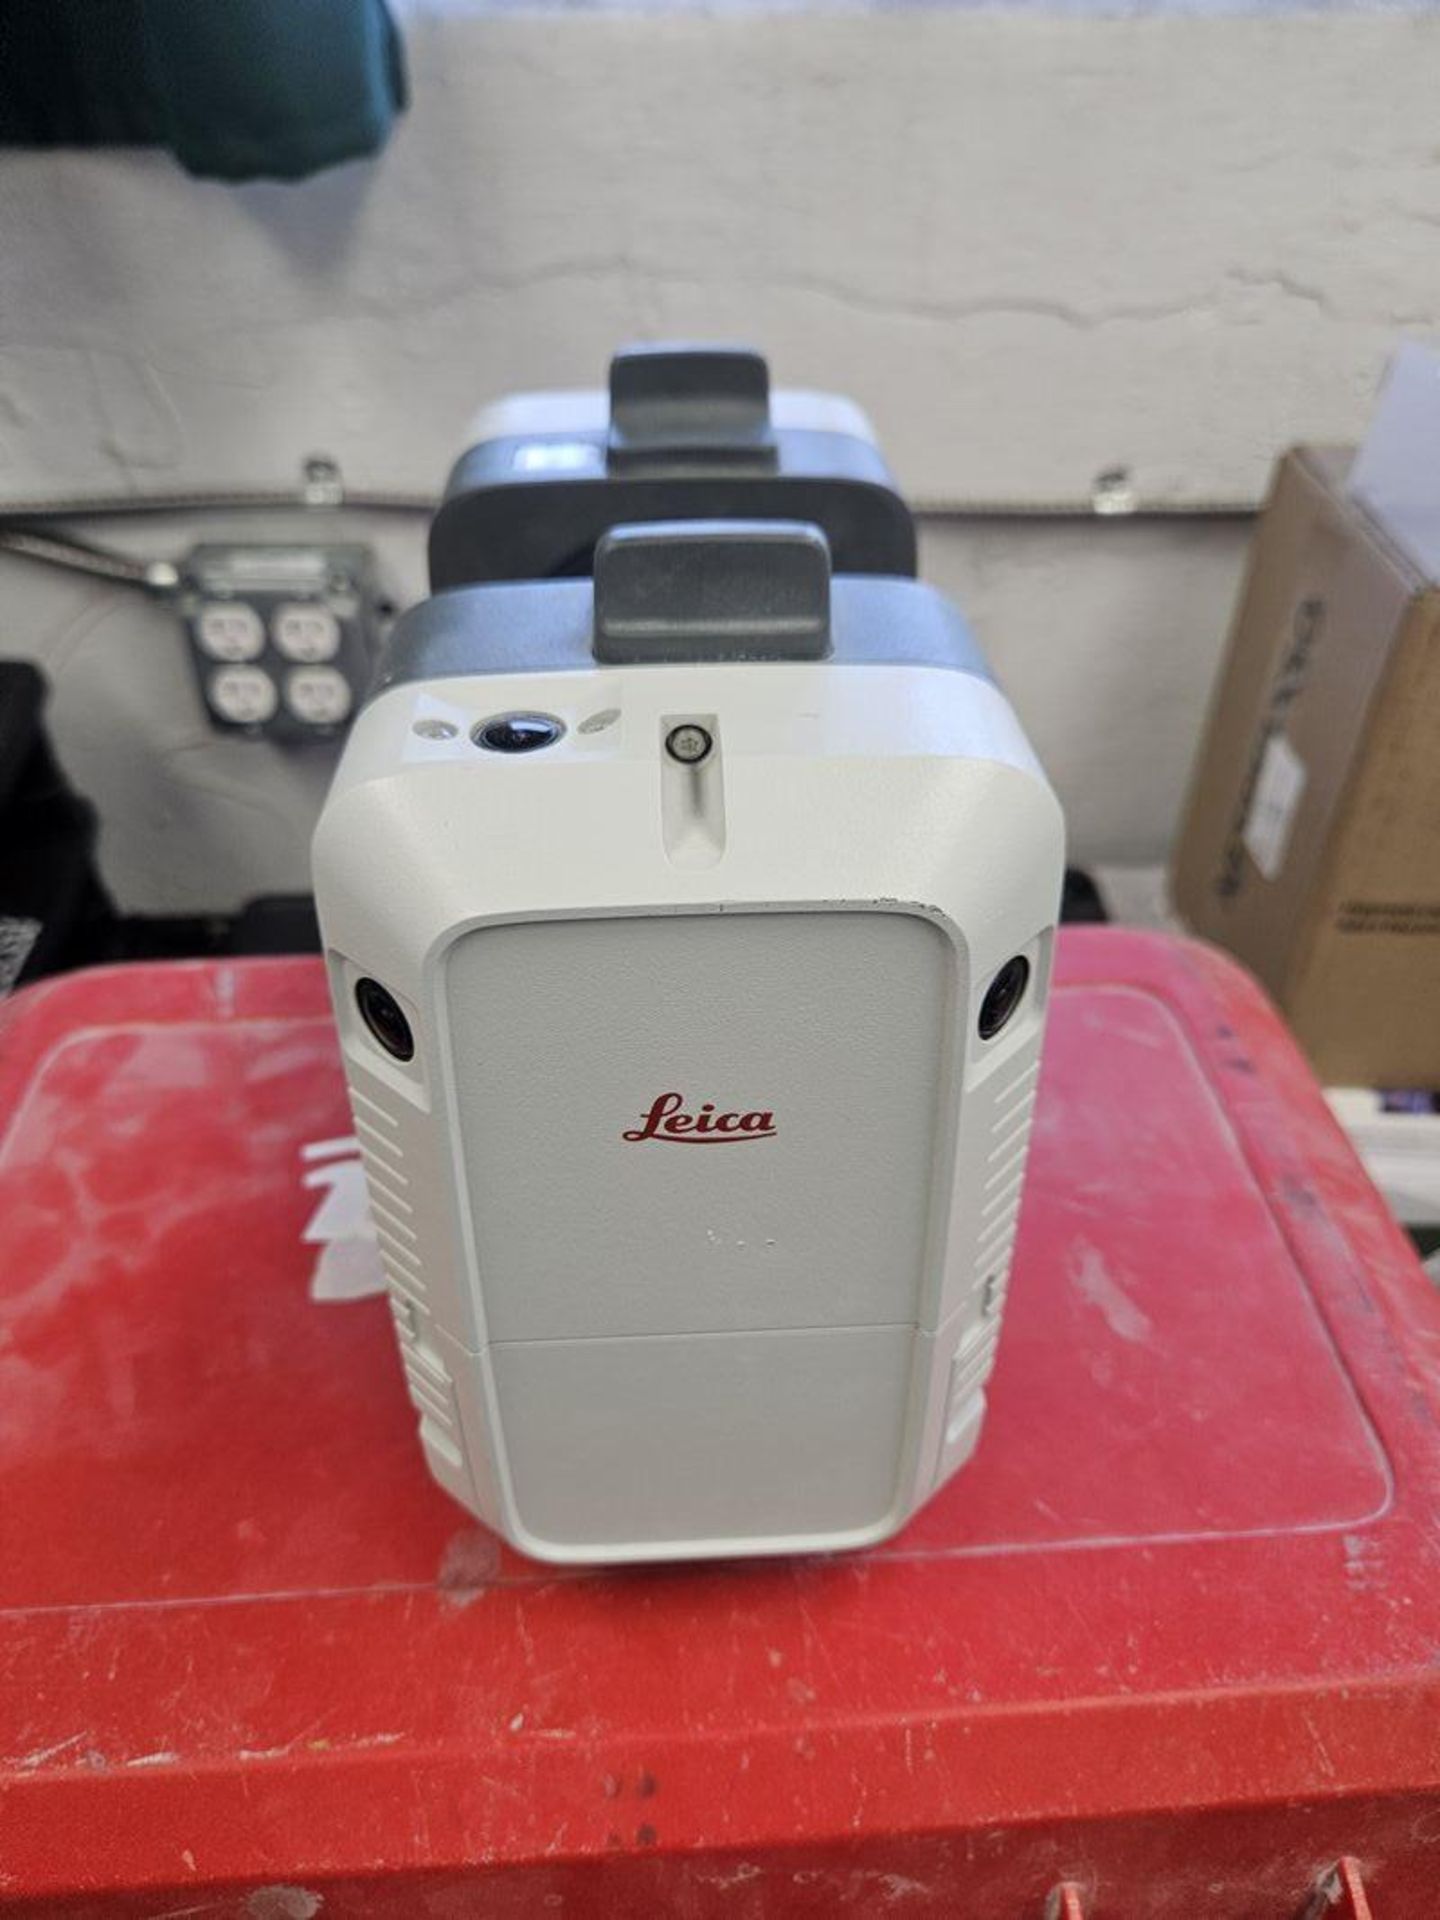 Leica RT360 Laser Scanner - Image 2 of 2